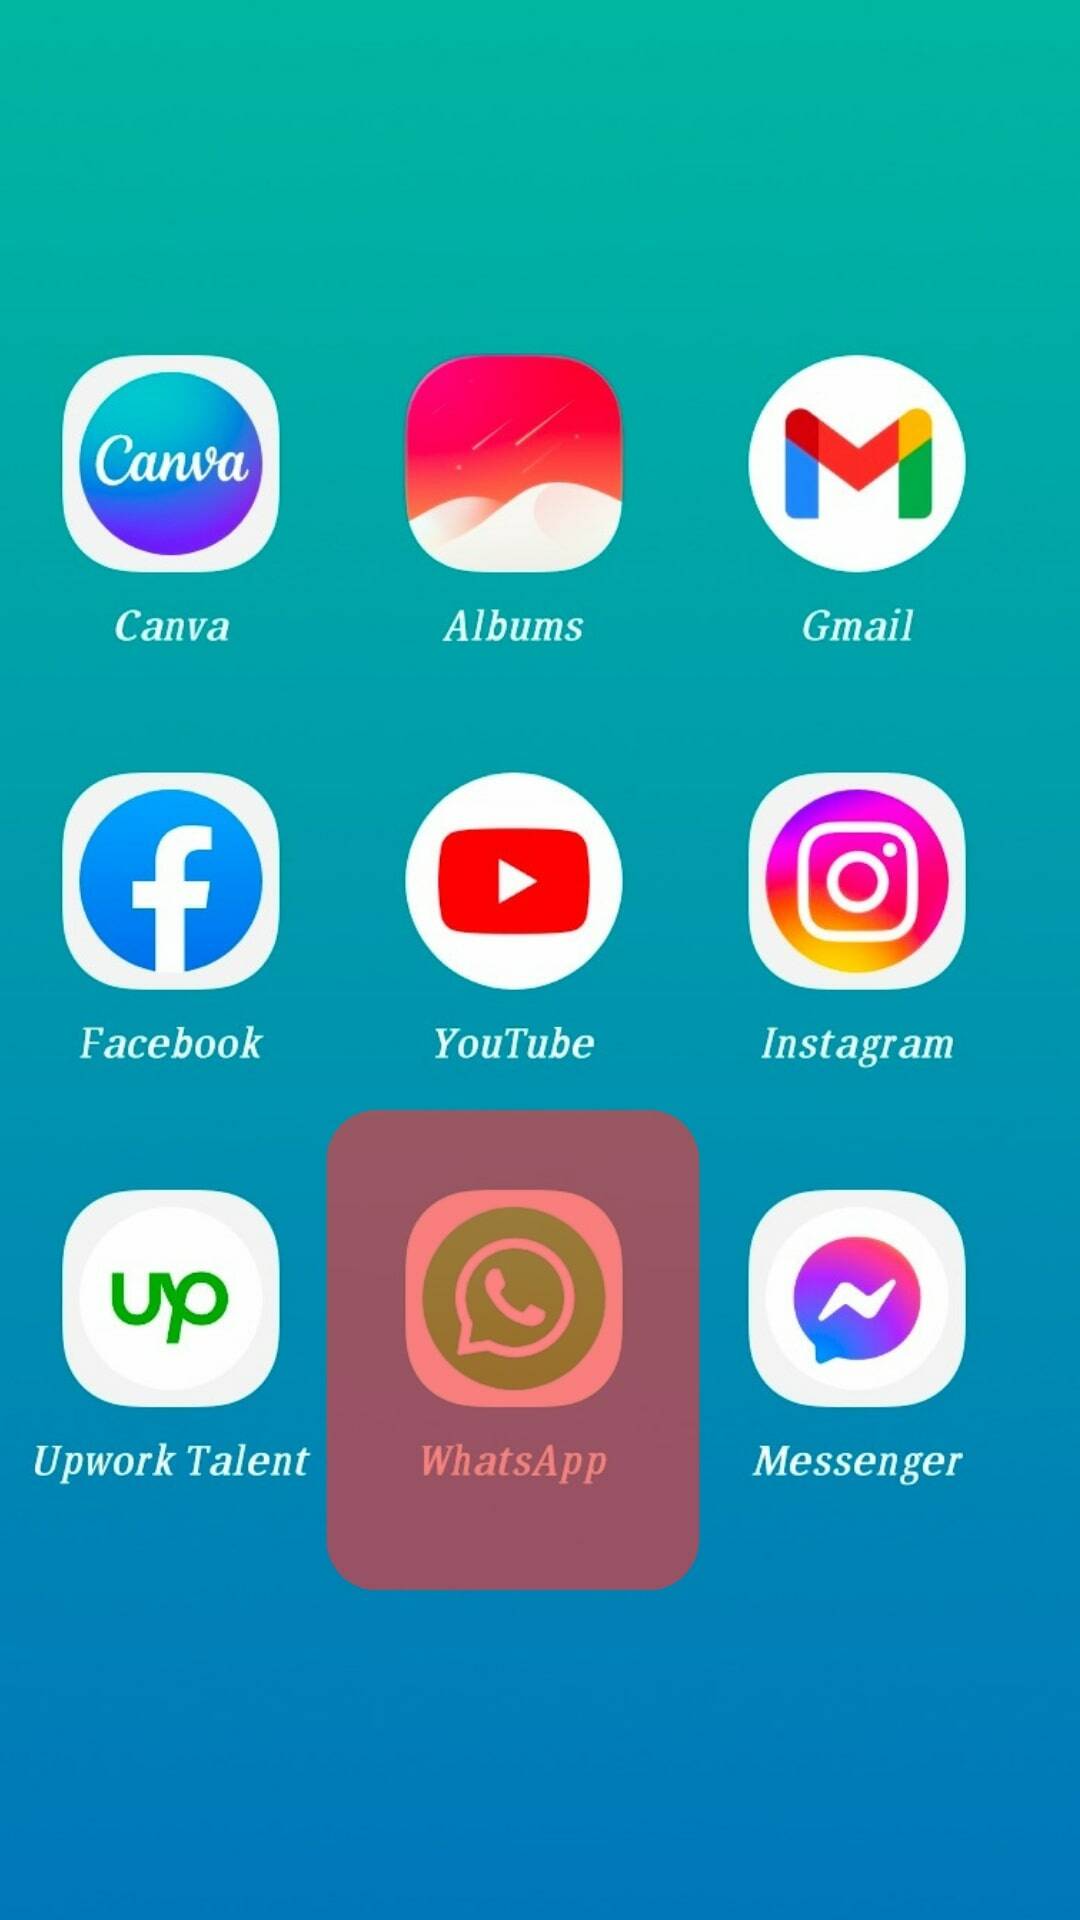 Whatsapp App On Mobile